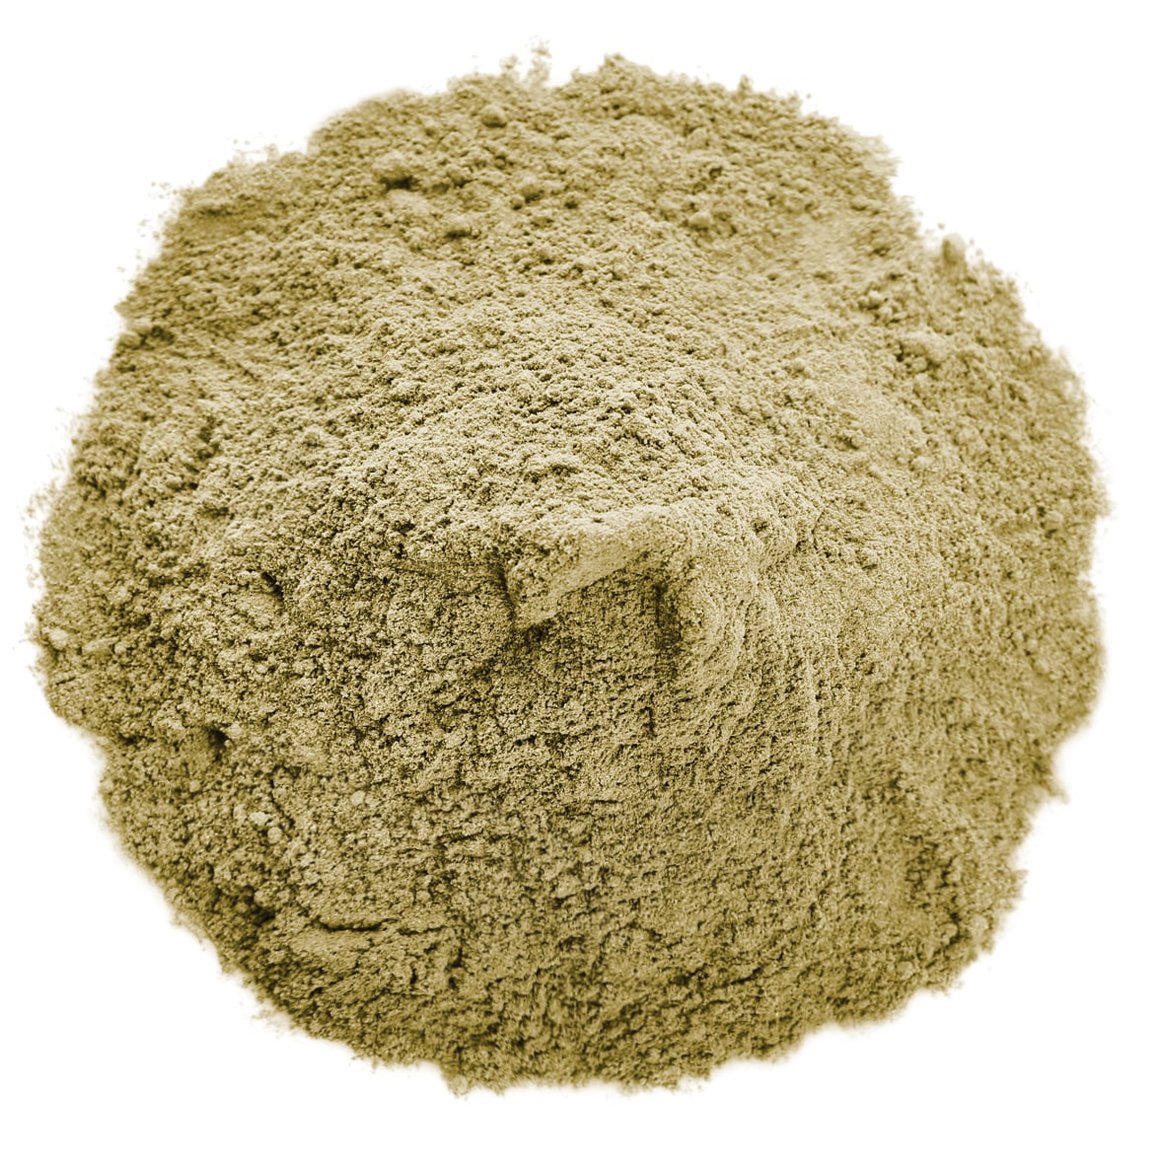 Organic-Hemp-Protein-Powder-Main-Min